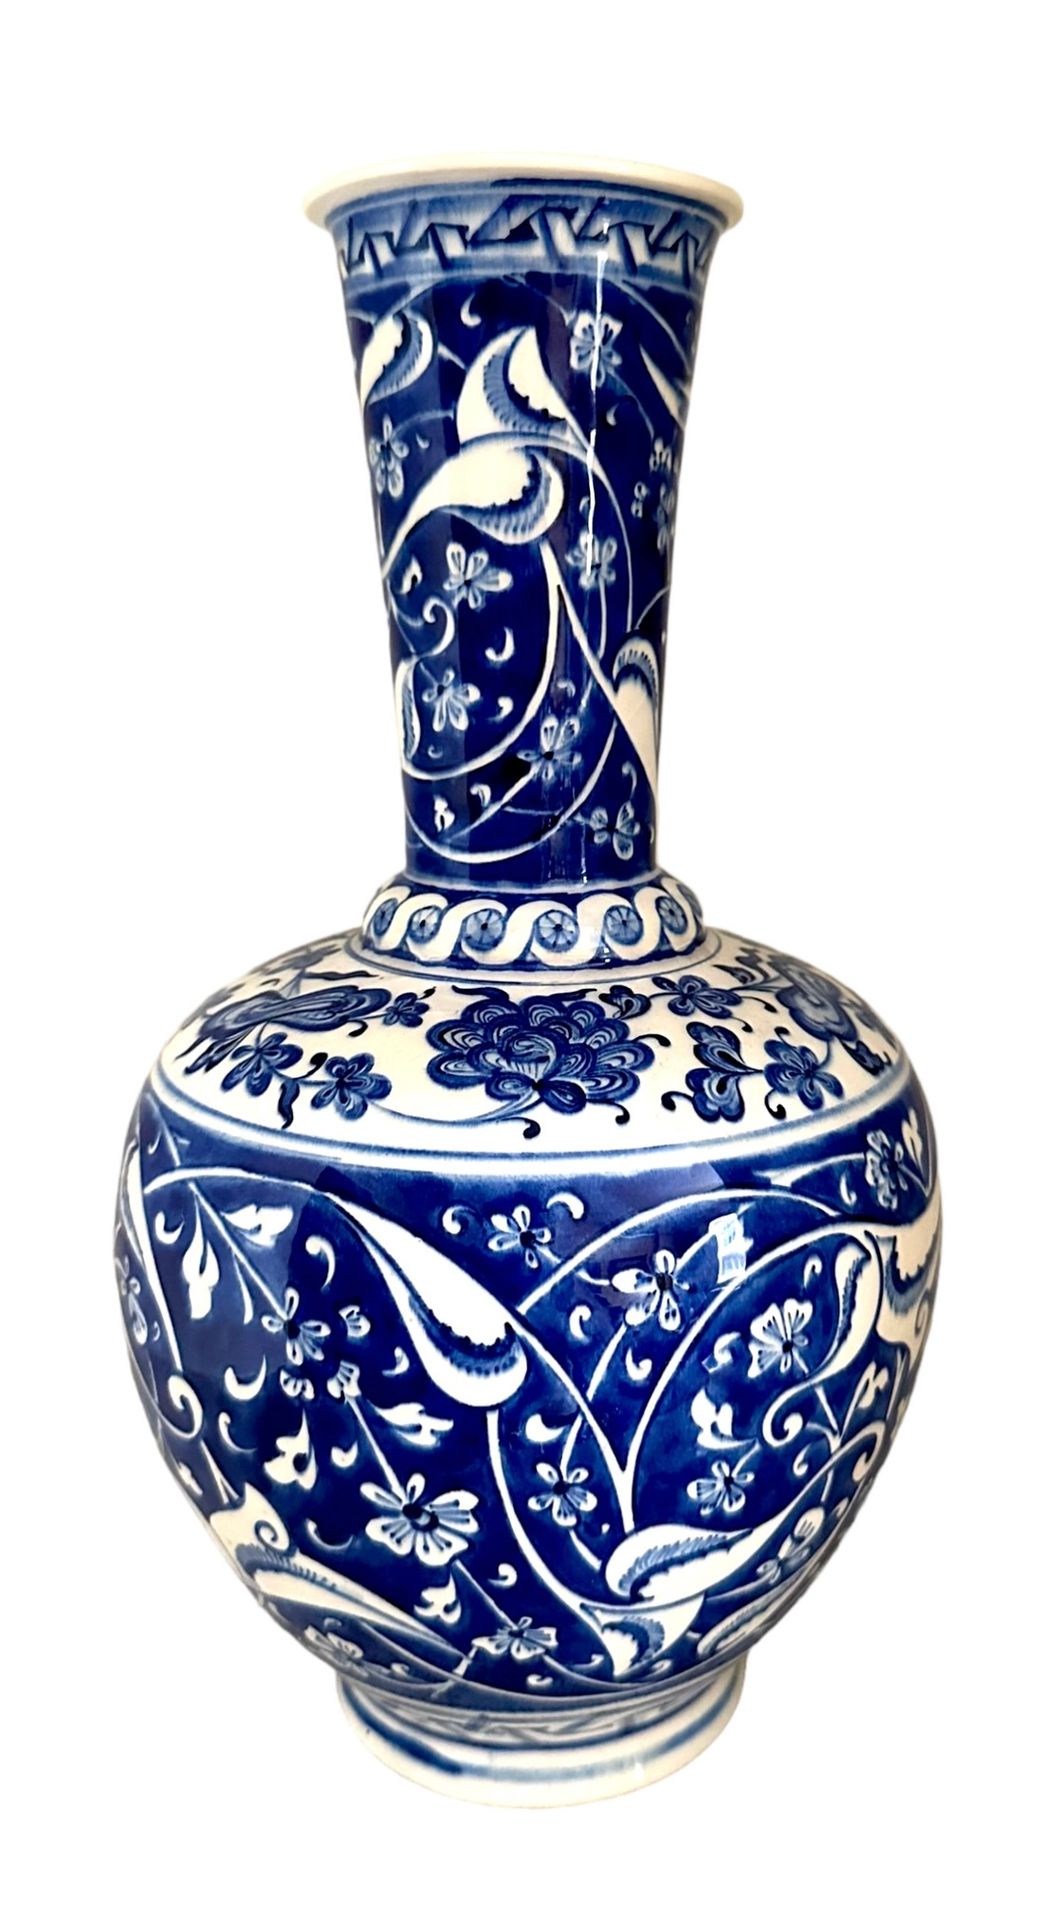 Adil Var Signed Ceramic Vase Blue and white ceramic with floral decoration, 2006&hellip;